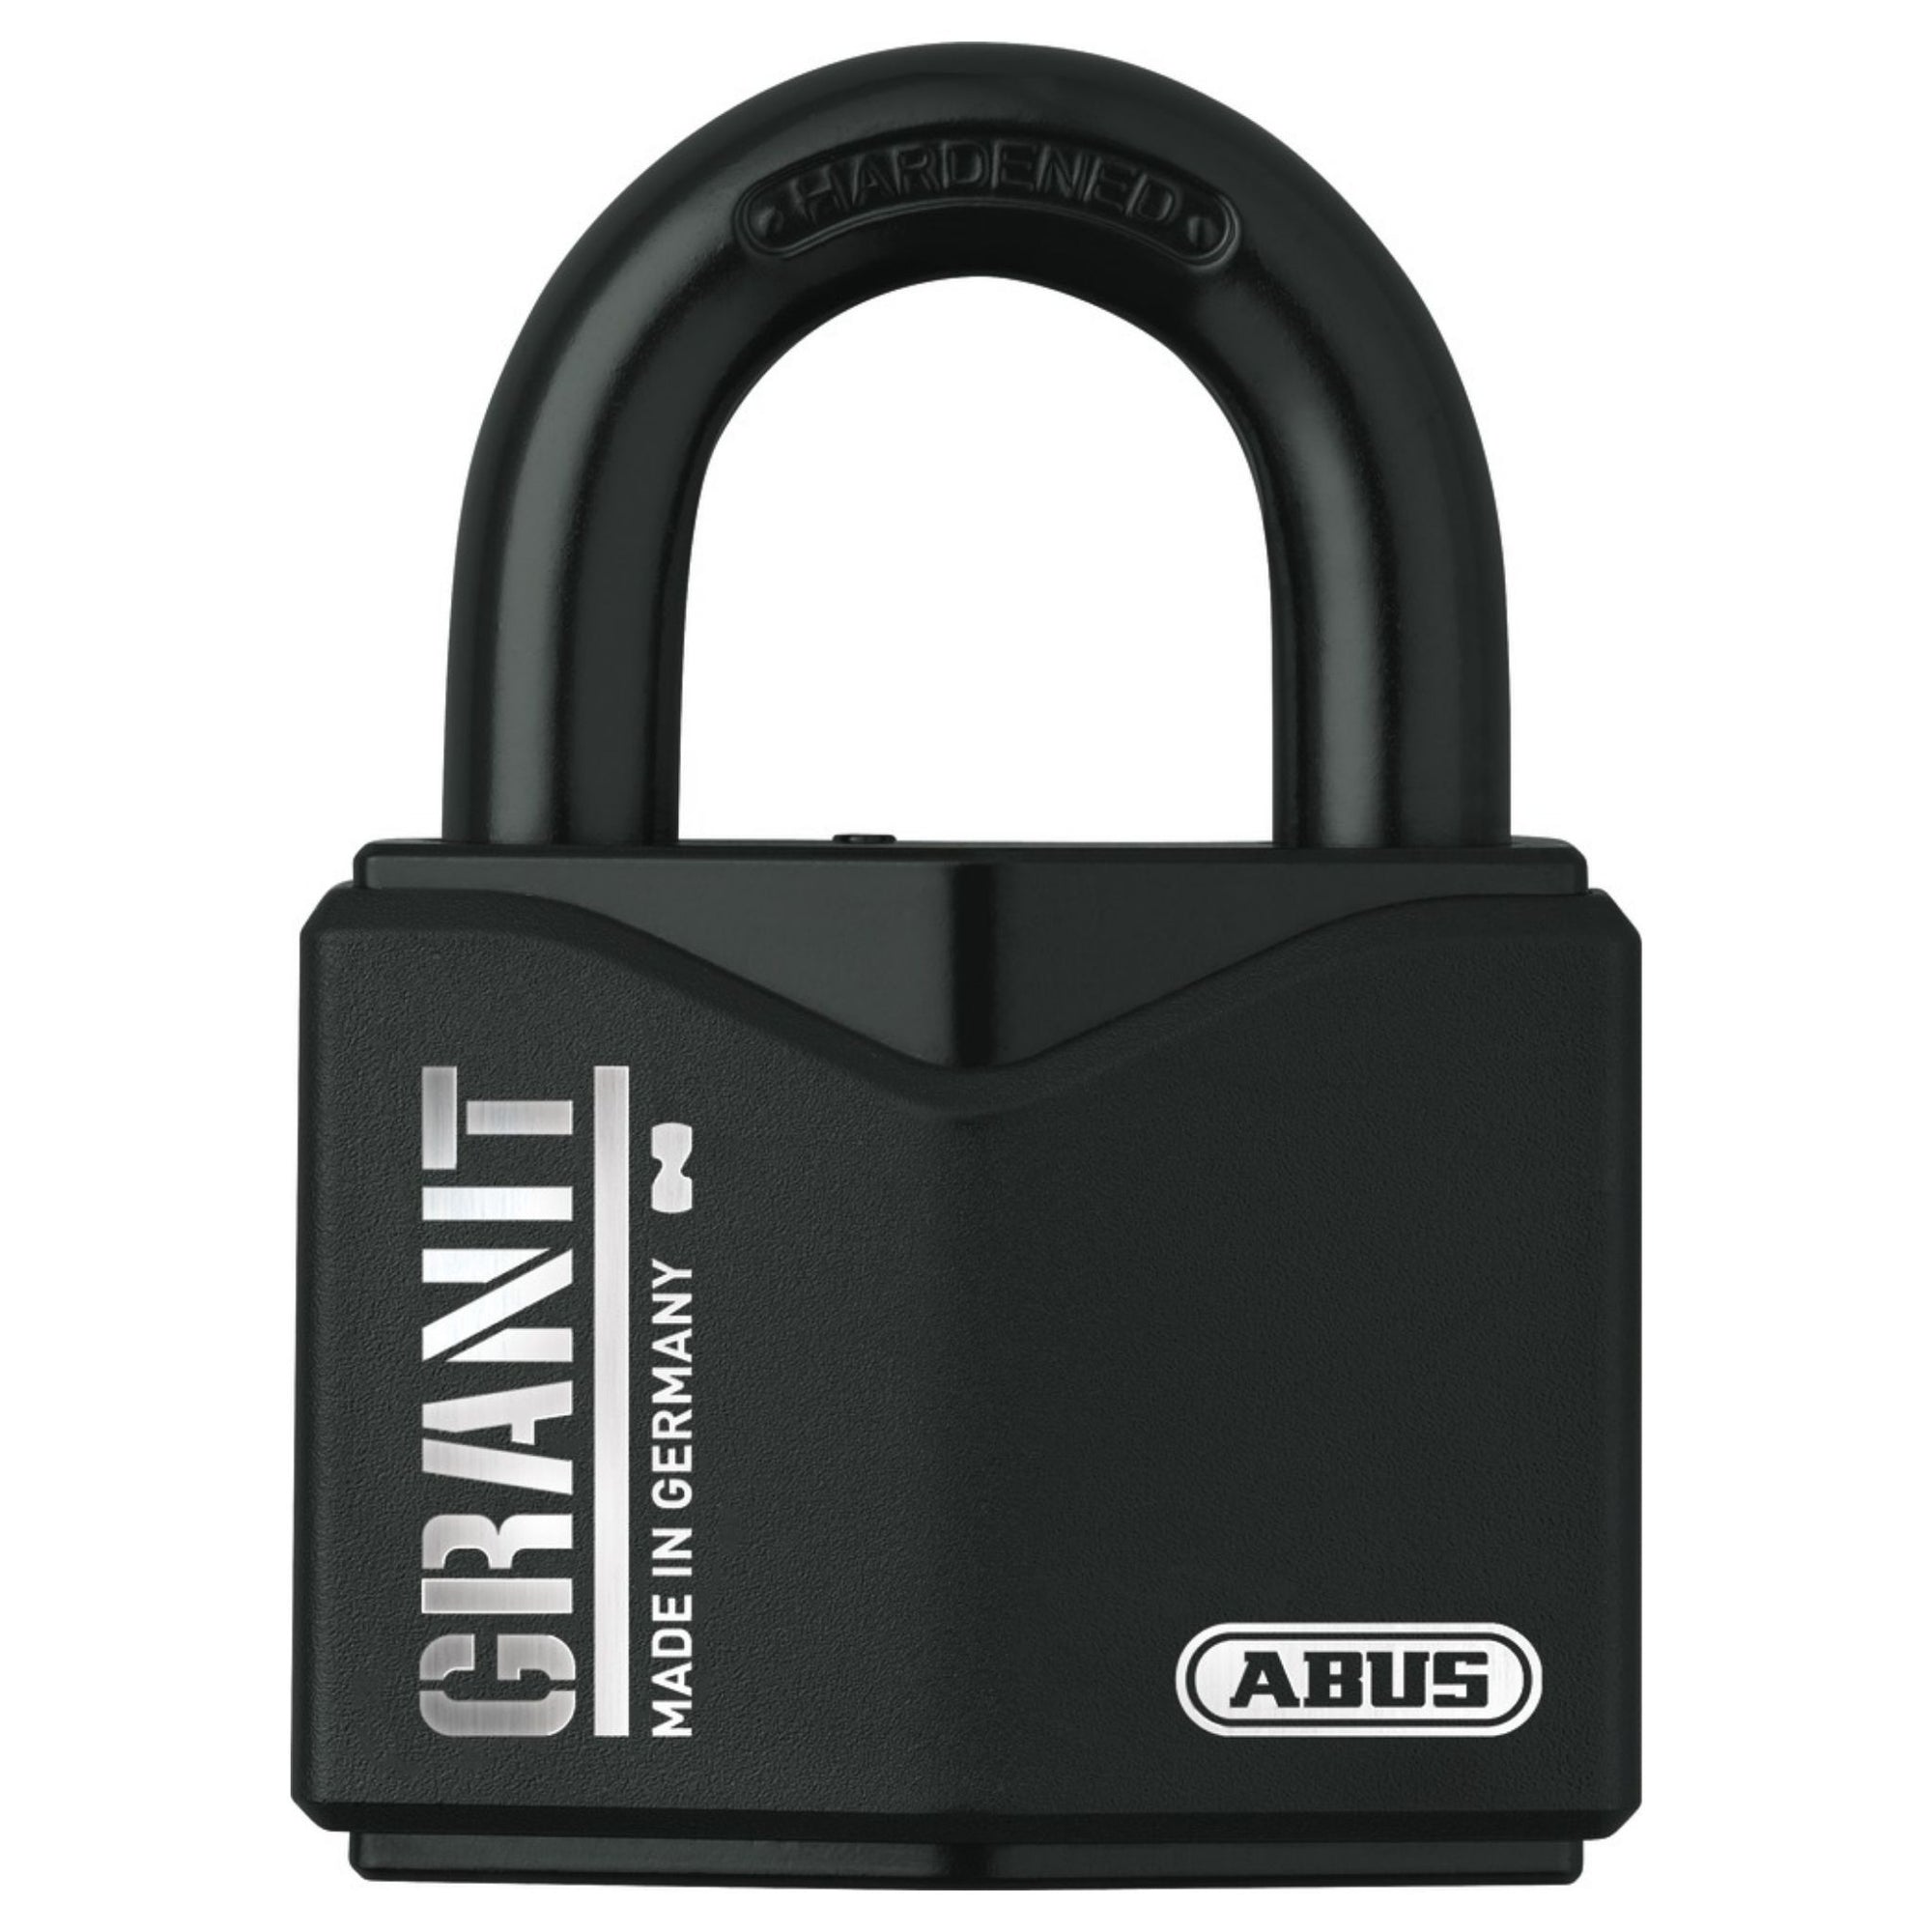 Abus 37RK/55 KA 5544653 Granit Lock Keyed Alike Black Granite Padlocks Matched to Existing Key# KA5544653 - The Lock Source